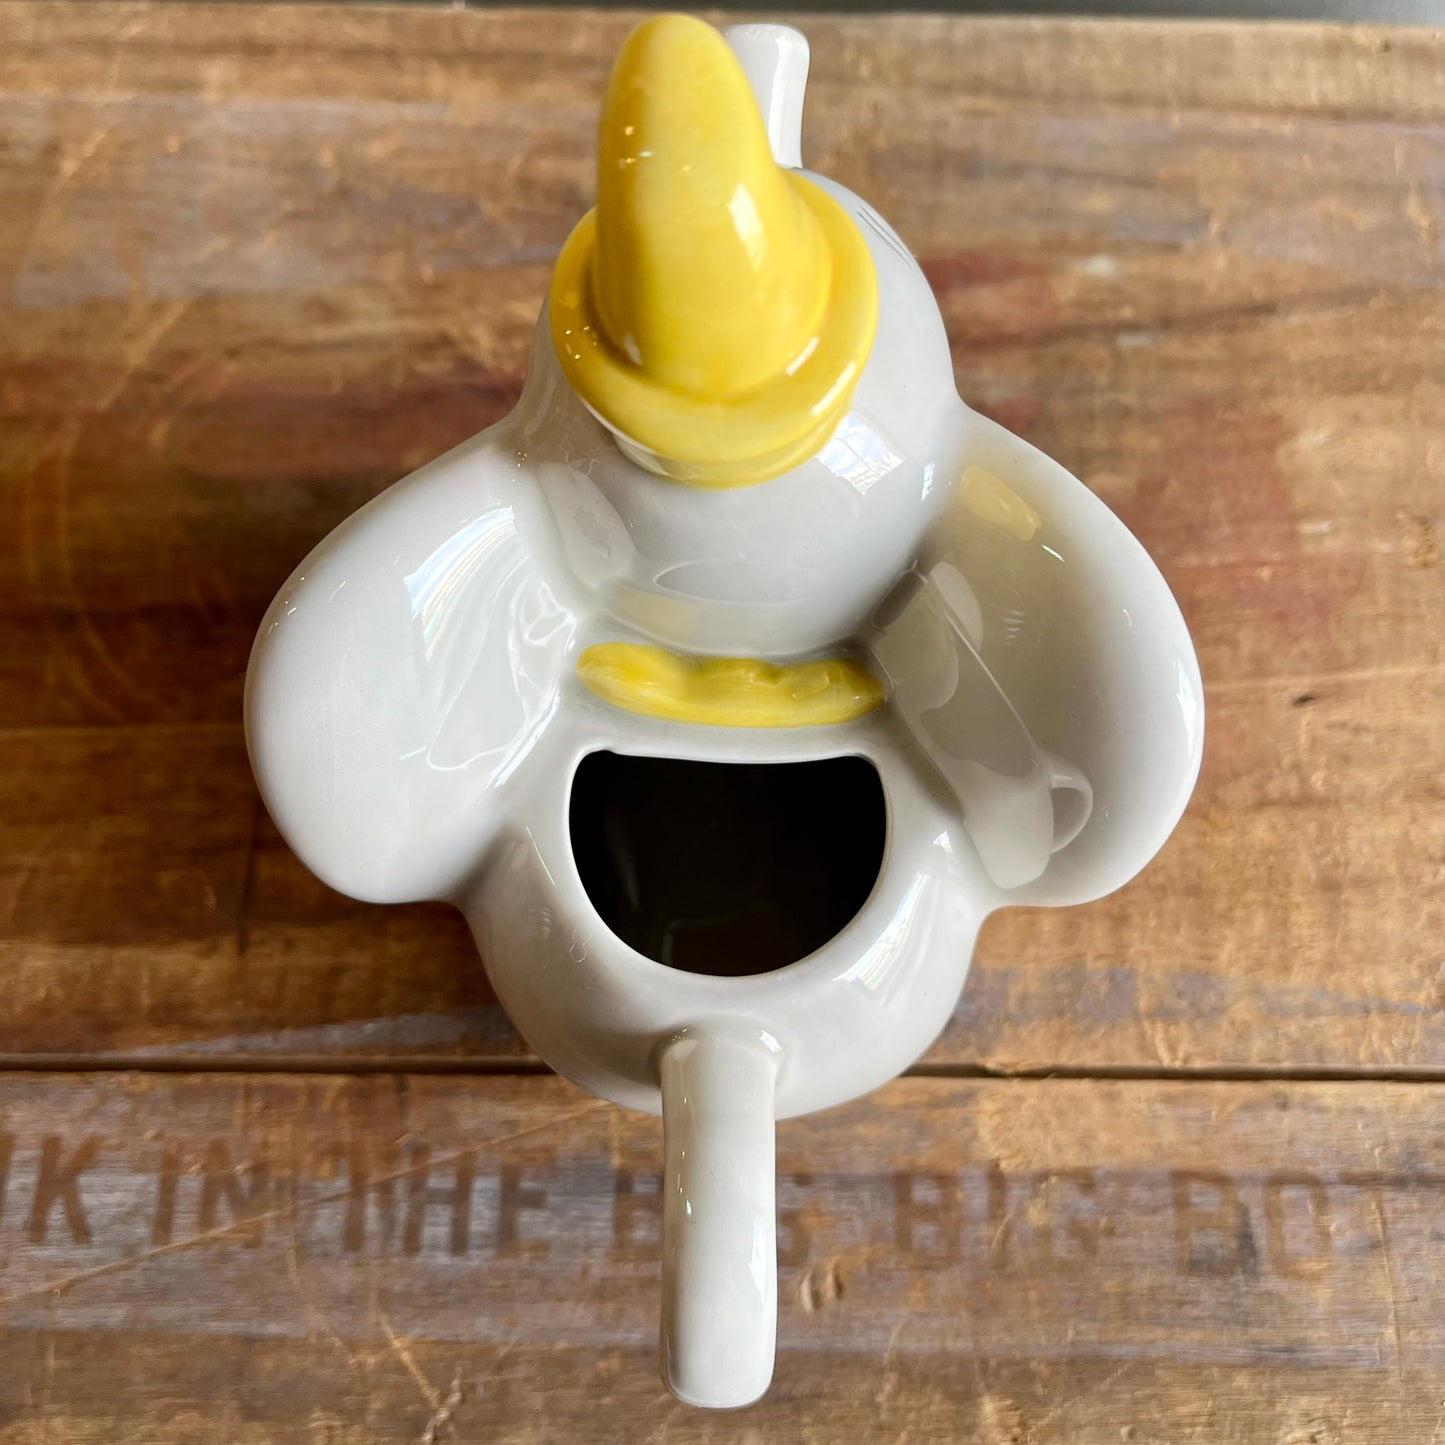 【USA vintage】Disney Dumbo Creamer Pitcher Jar